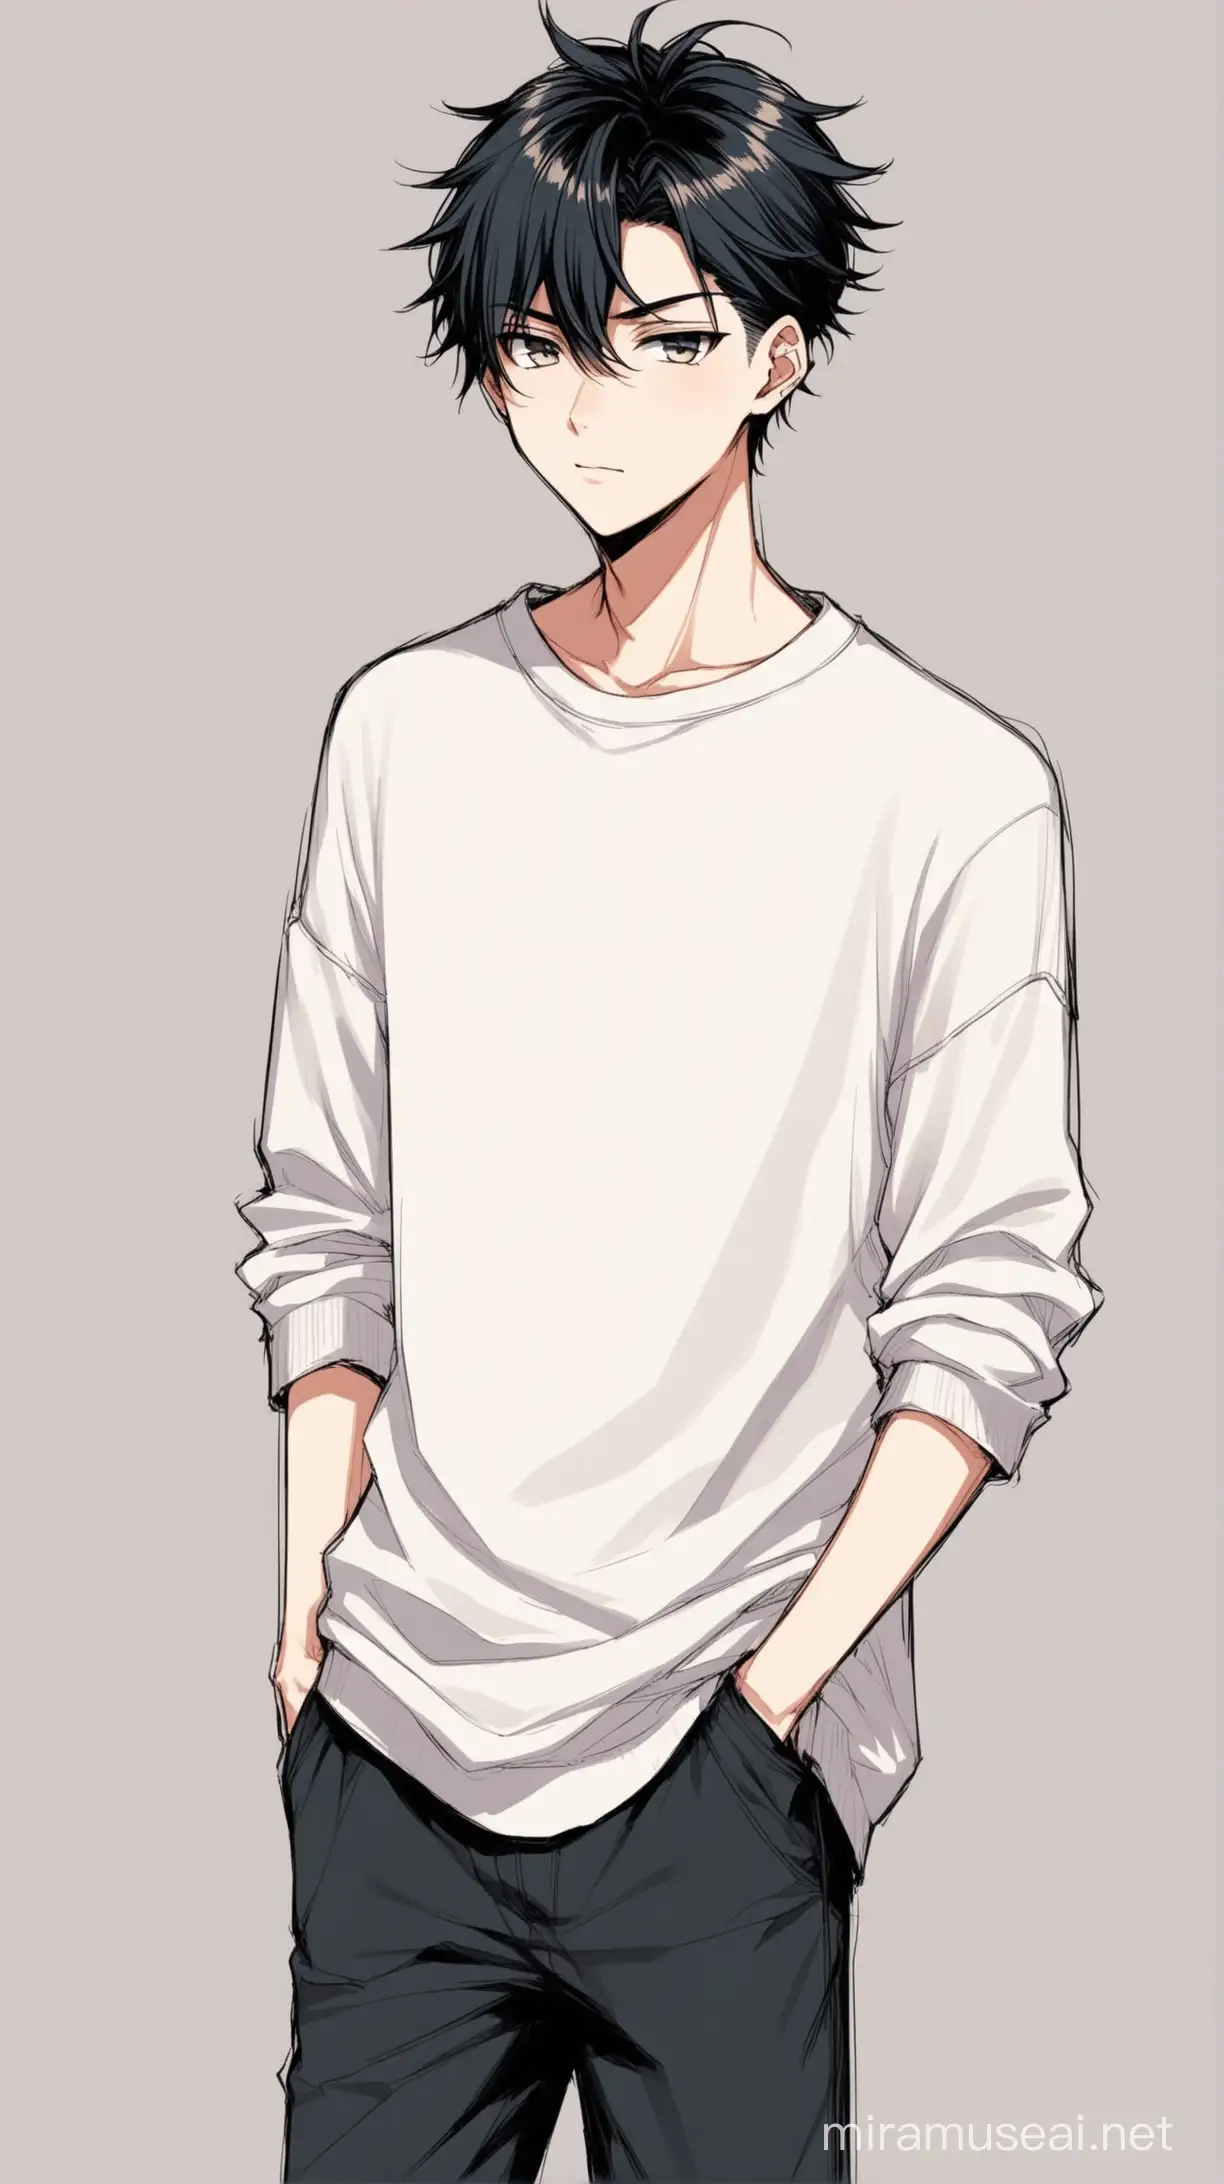 19 year old boy, Jude Harping. Taper fade hairstyle, minimalist streetwear. Romance manga main character. 